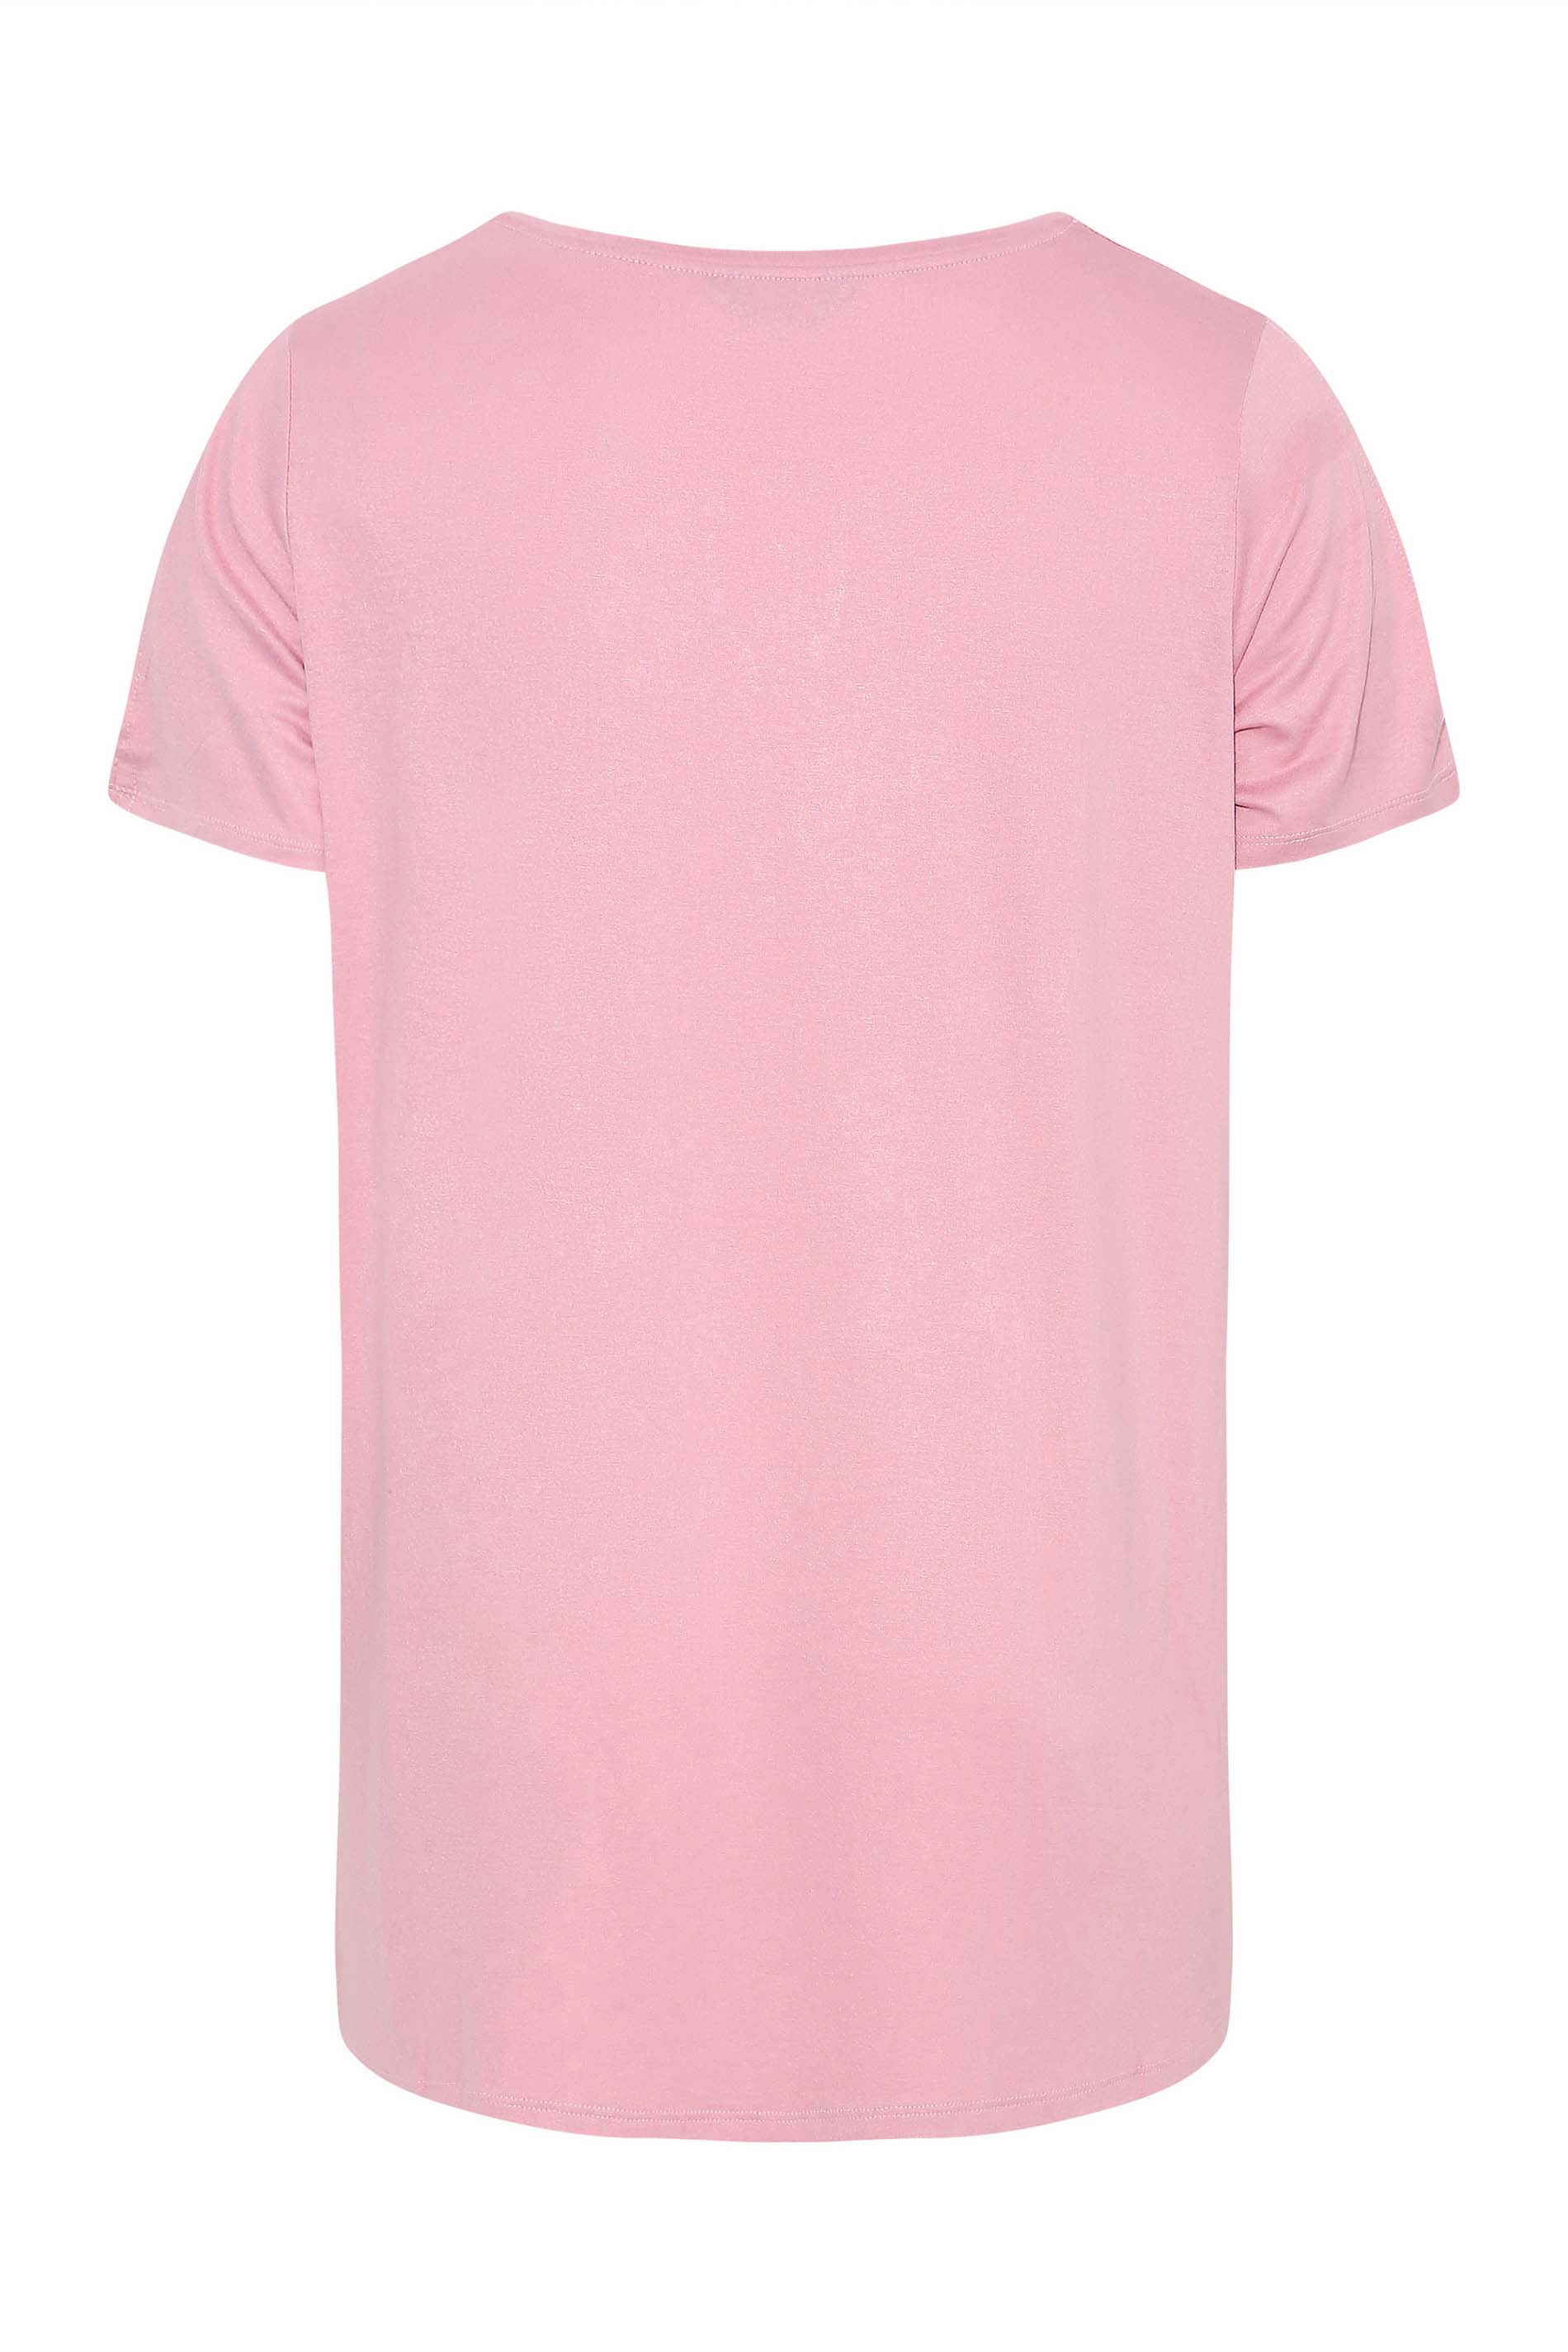 Grande taille  Tops Grande taille  T-Shirts | T-Shirt Rose Design Floral Manches Découpées - EH72601